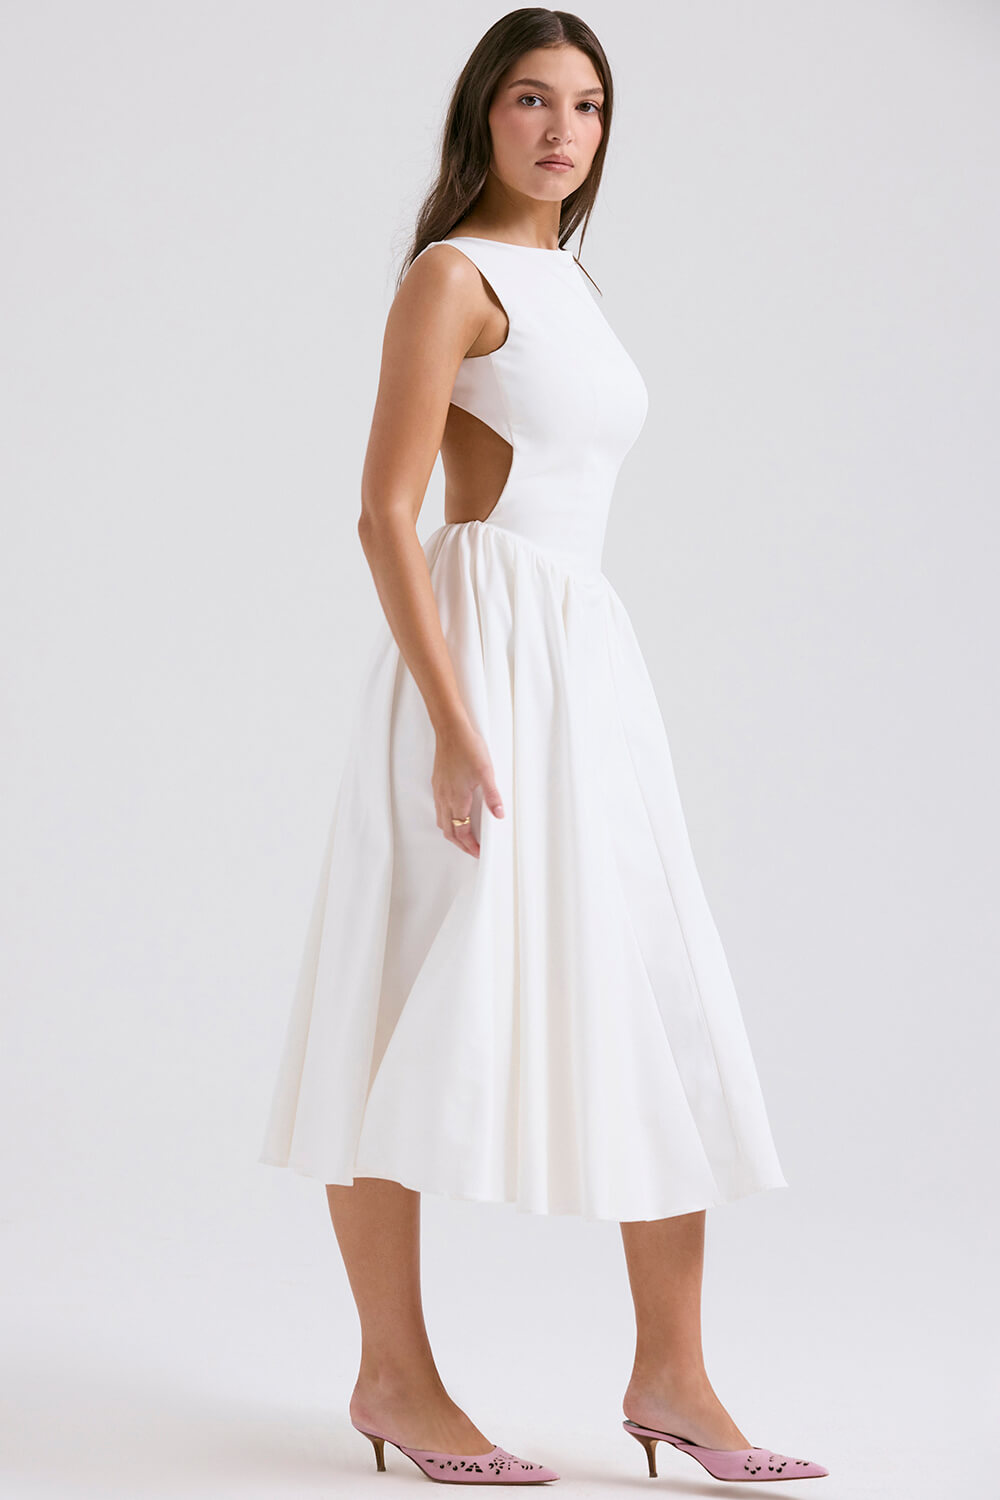 Stylish And Elegant Solid Color Round Neck Backless Sleeveless Midi Dress